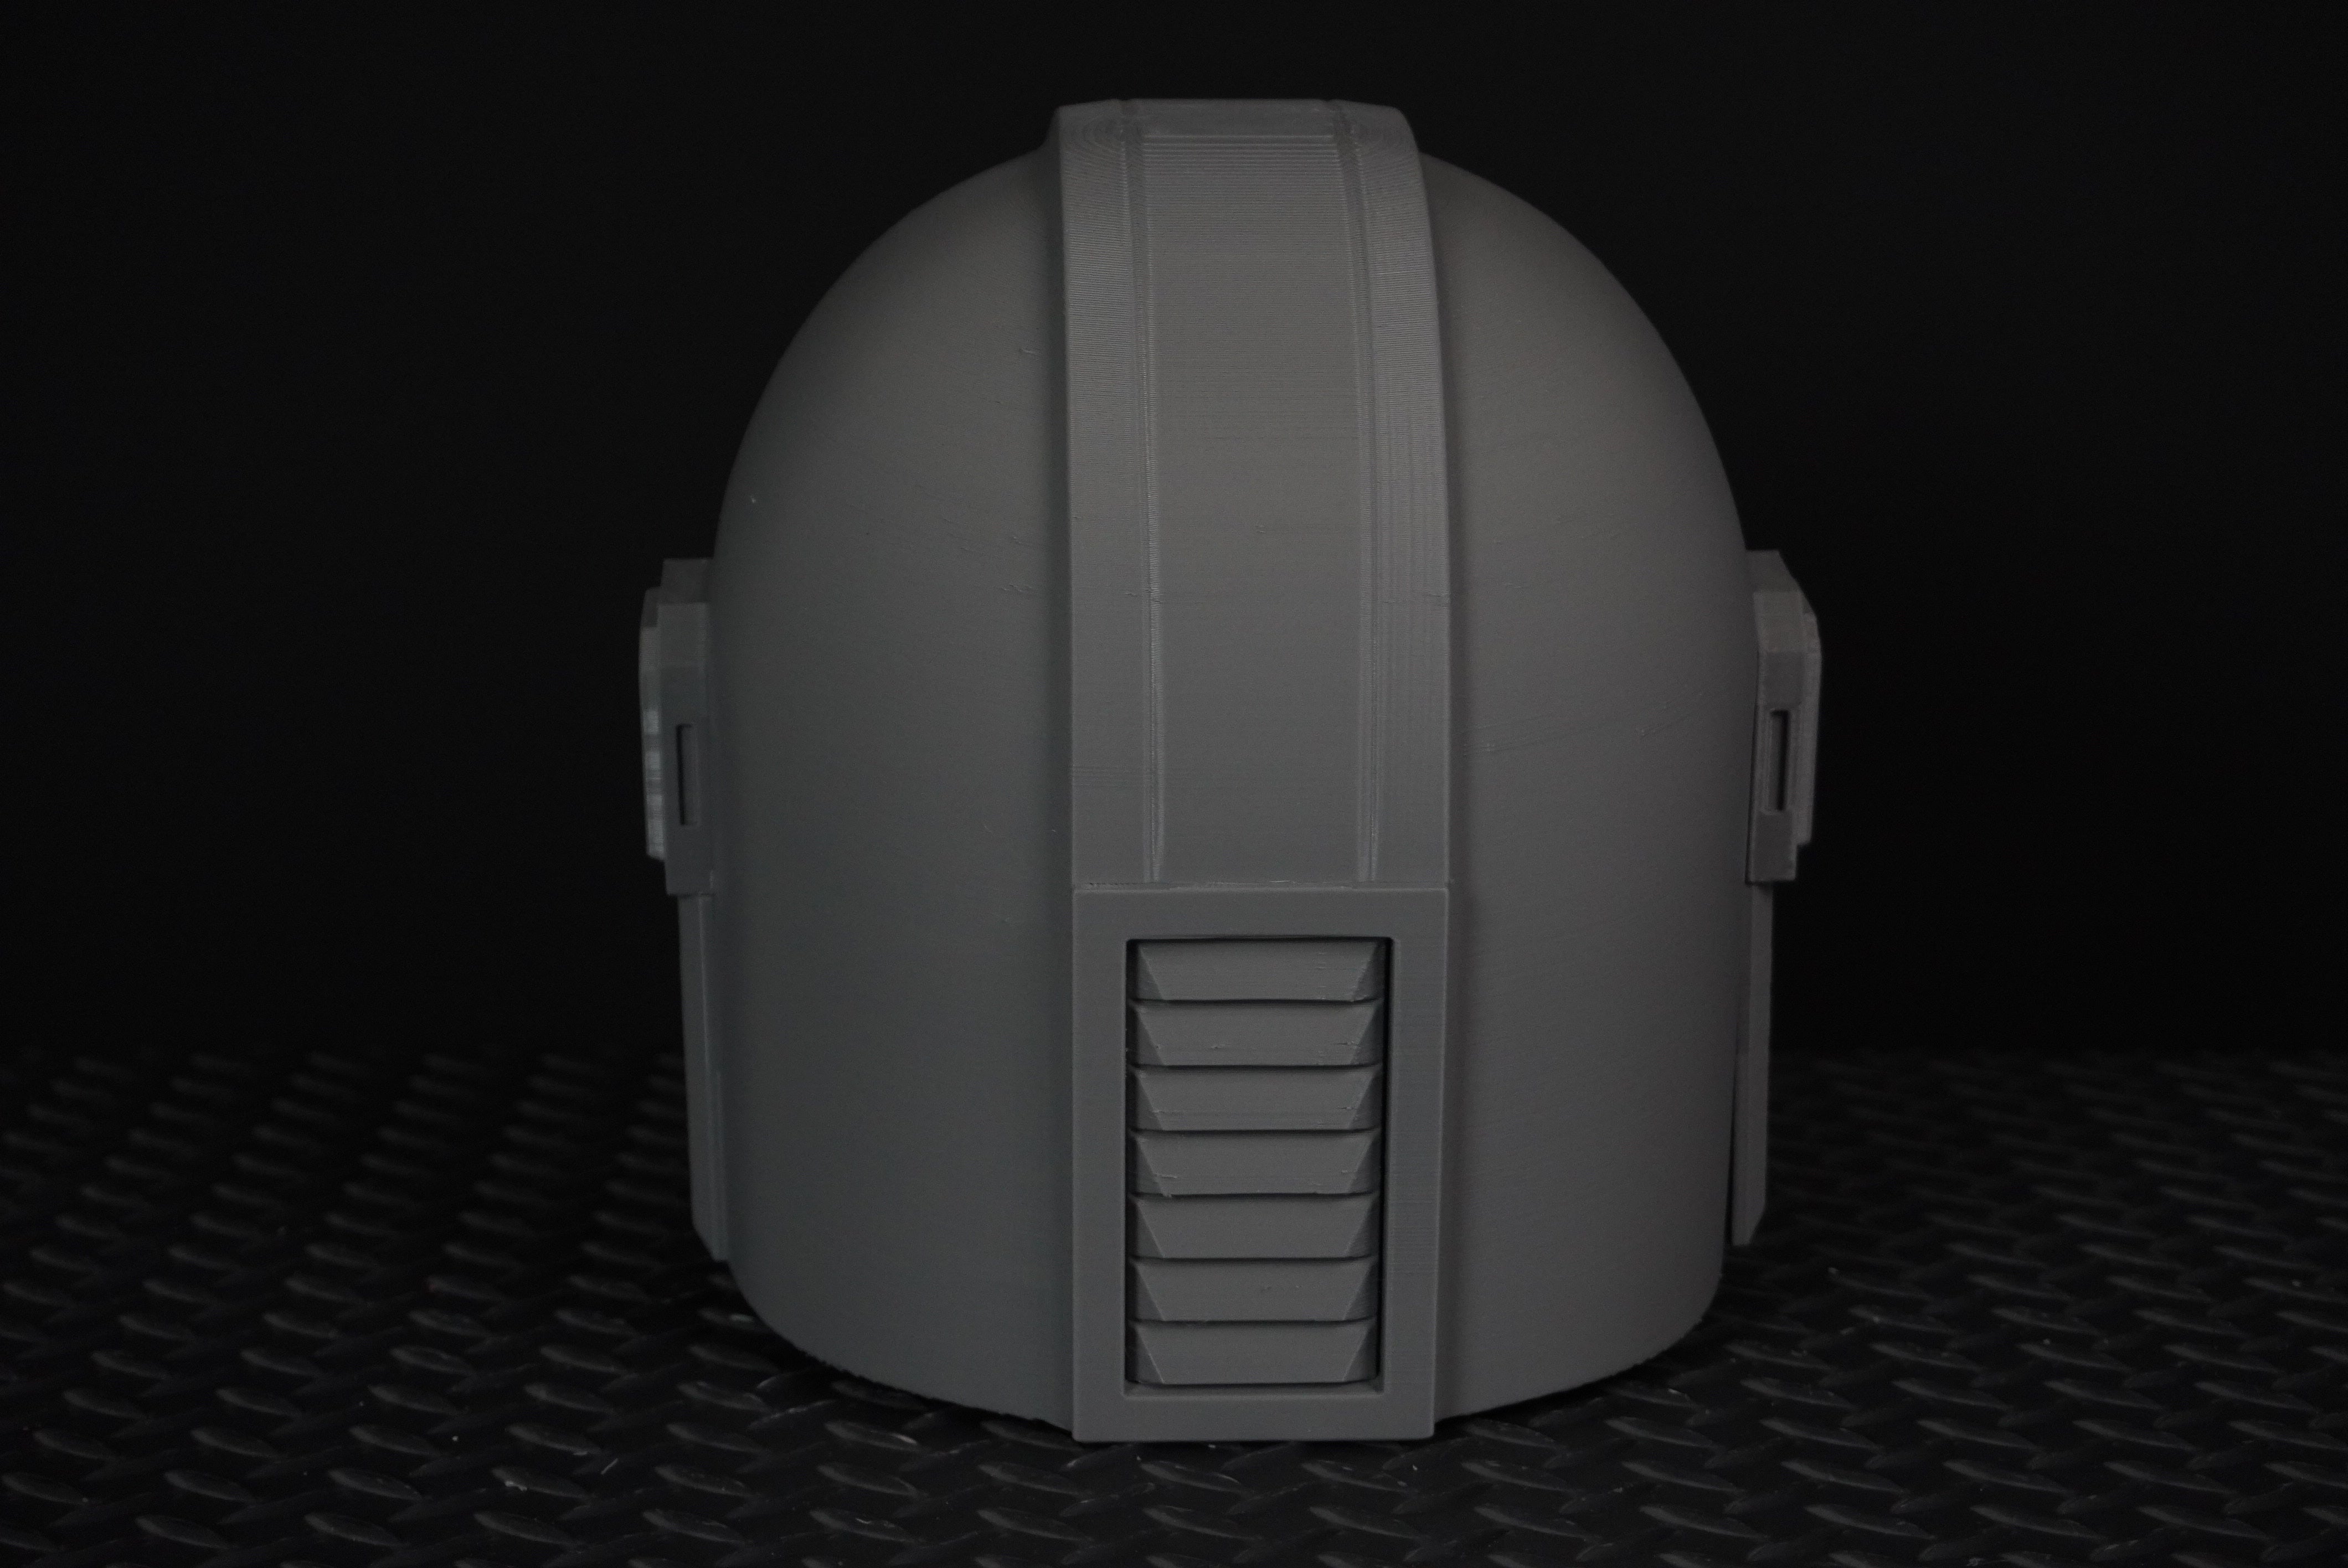 Mando Spartan Helmet - Star Wars Based - DIY